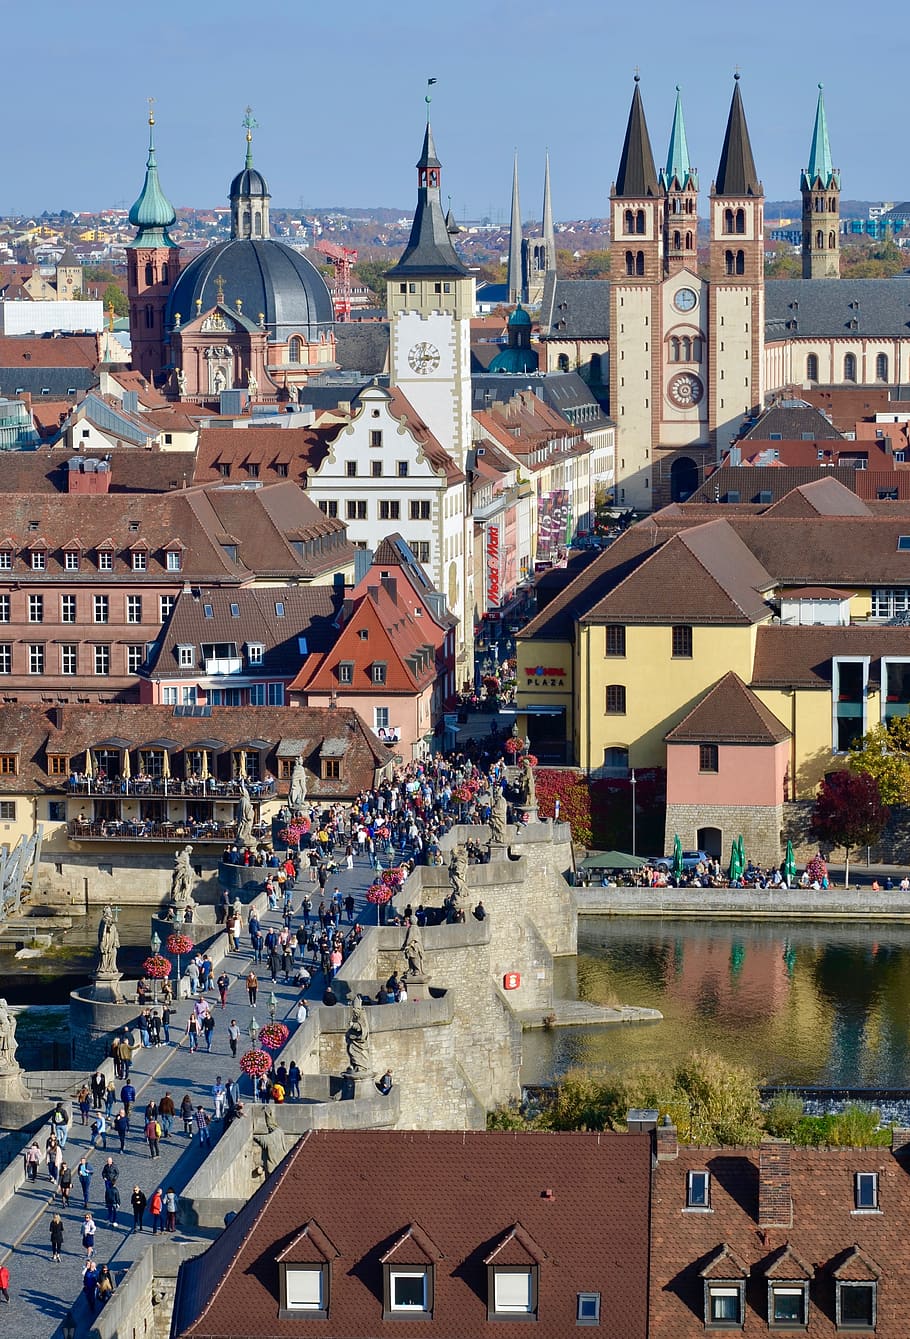 würzburg, main bridge, swiss francs, historically, places of interest